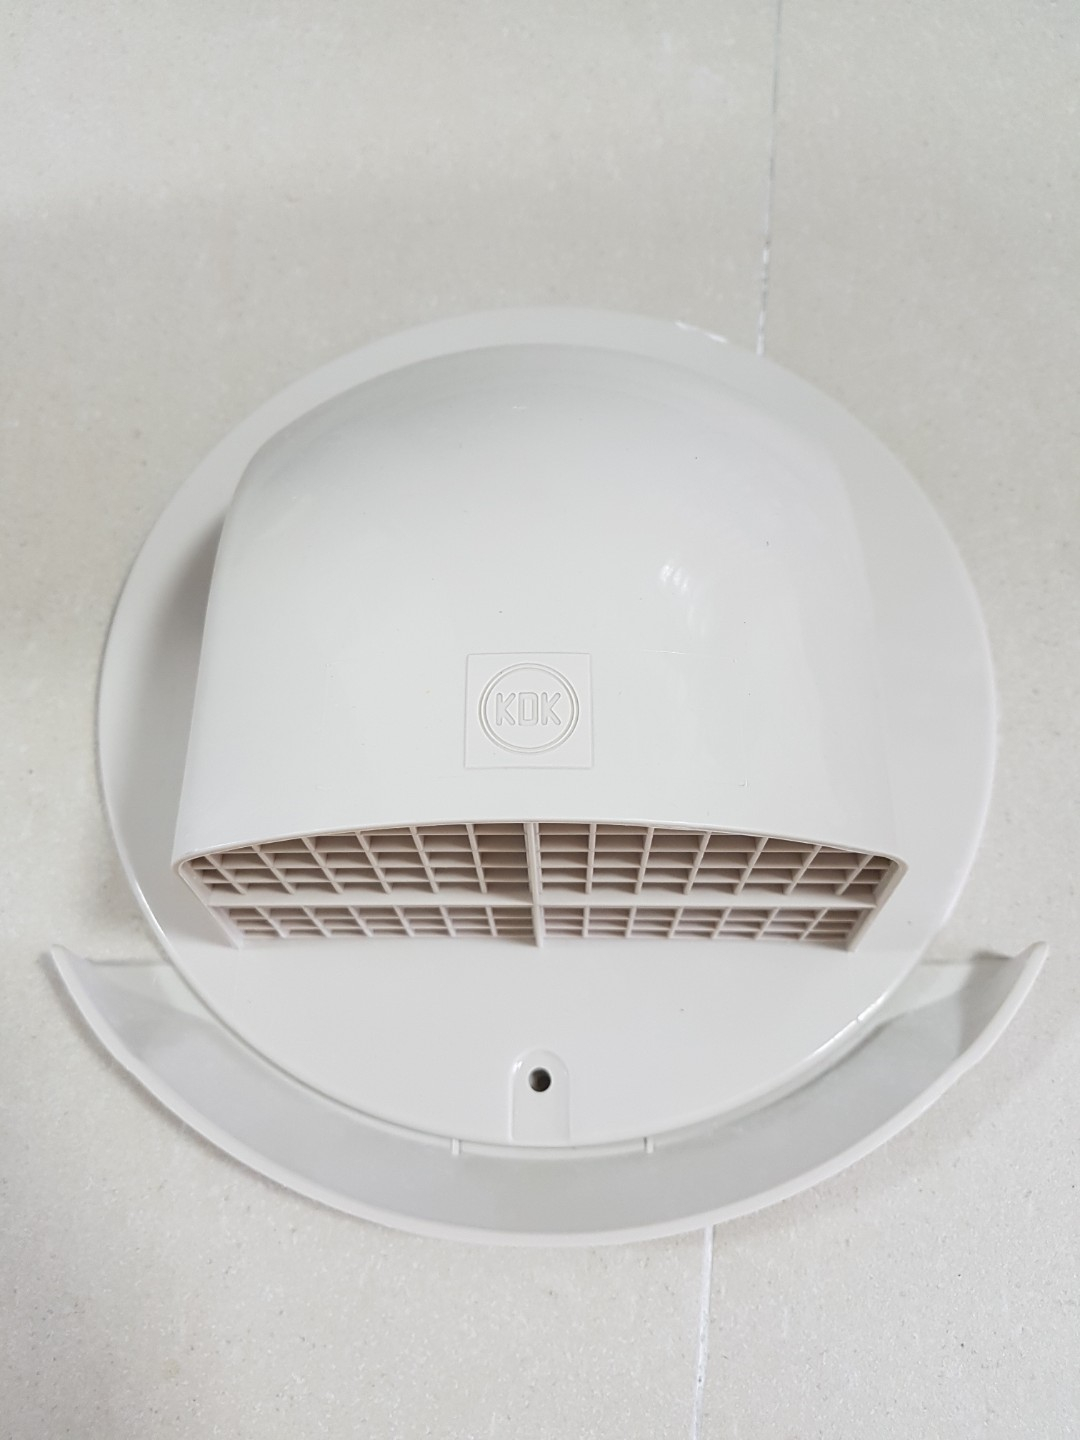 Kdk Ventilation Fan Cover Home Appliances Cooling Air in measurements 1080 X 1440